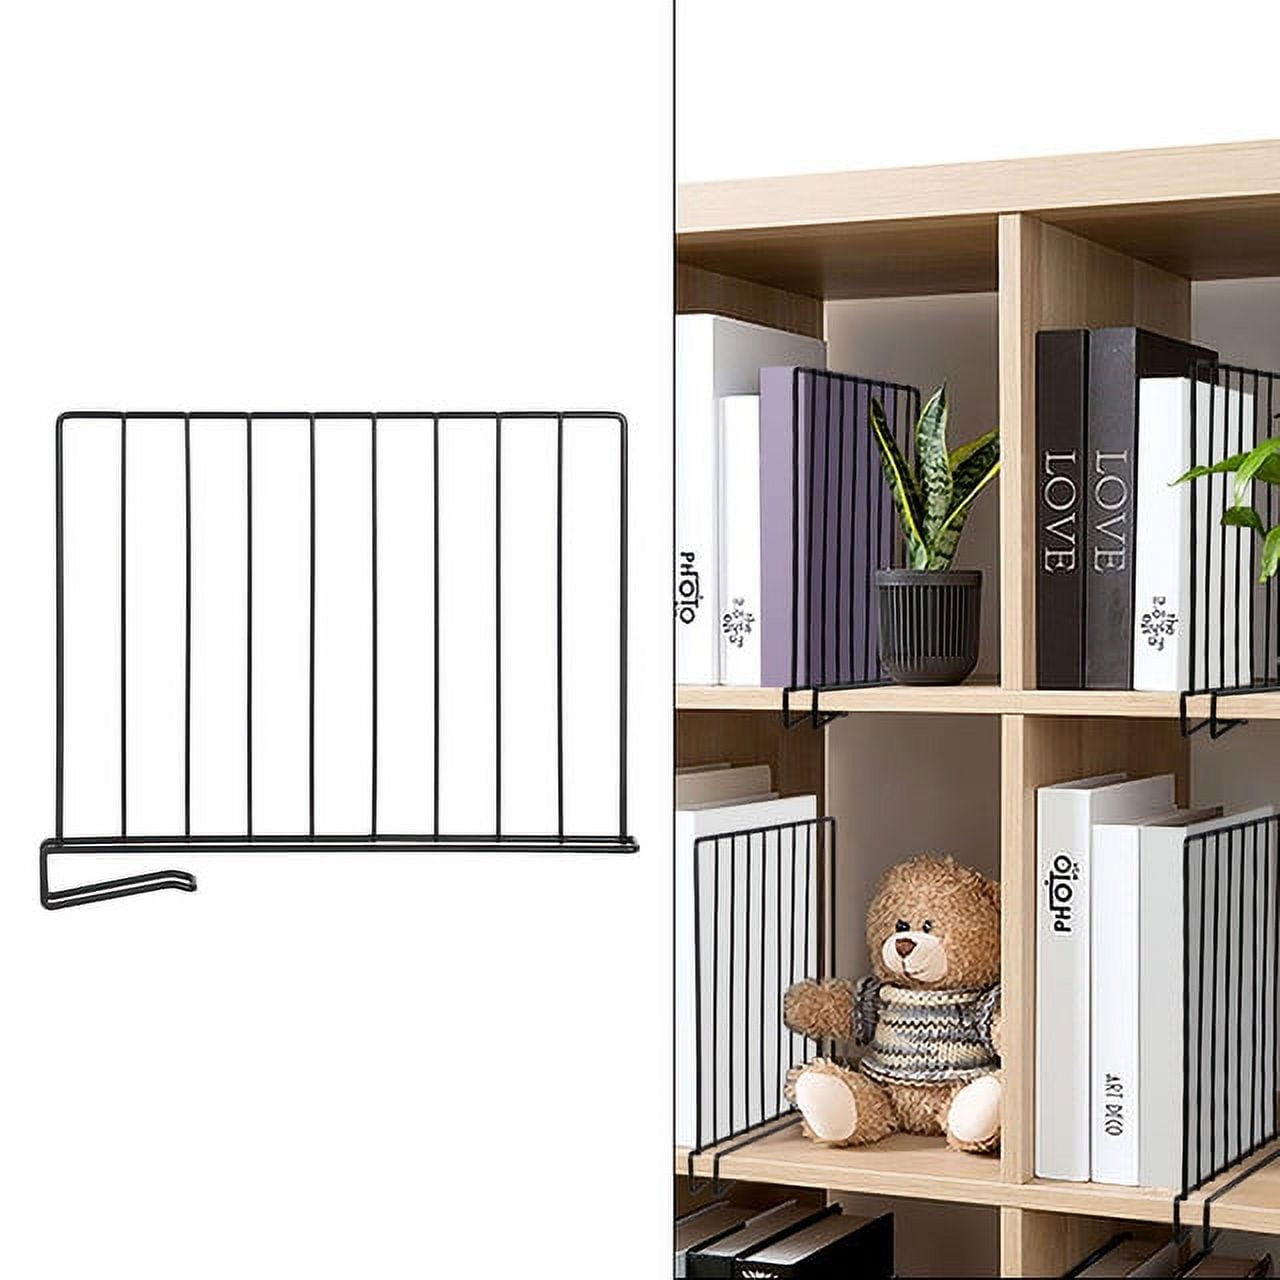 3H x 17L Metal Shelf Divider for 17D Shelf